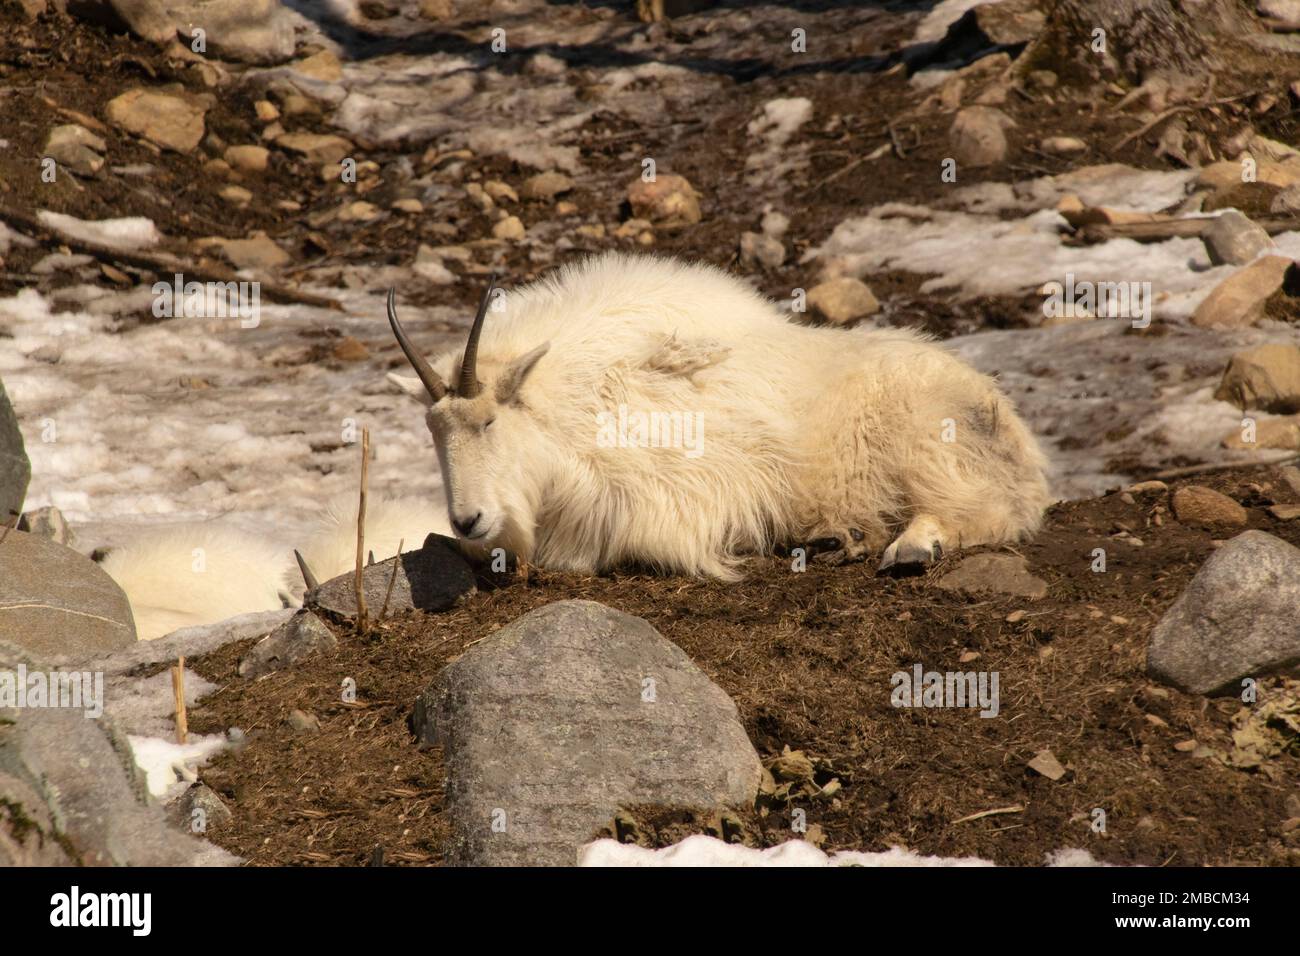 A Rocky Mountain Goat. Stock Photo